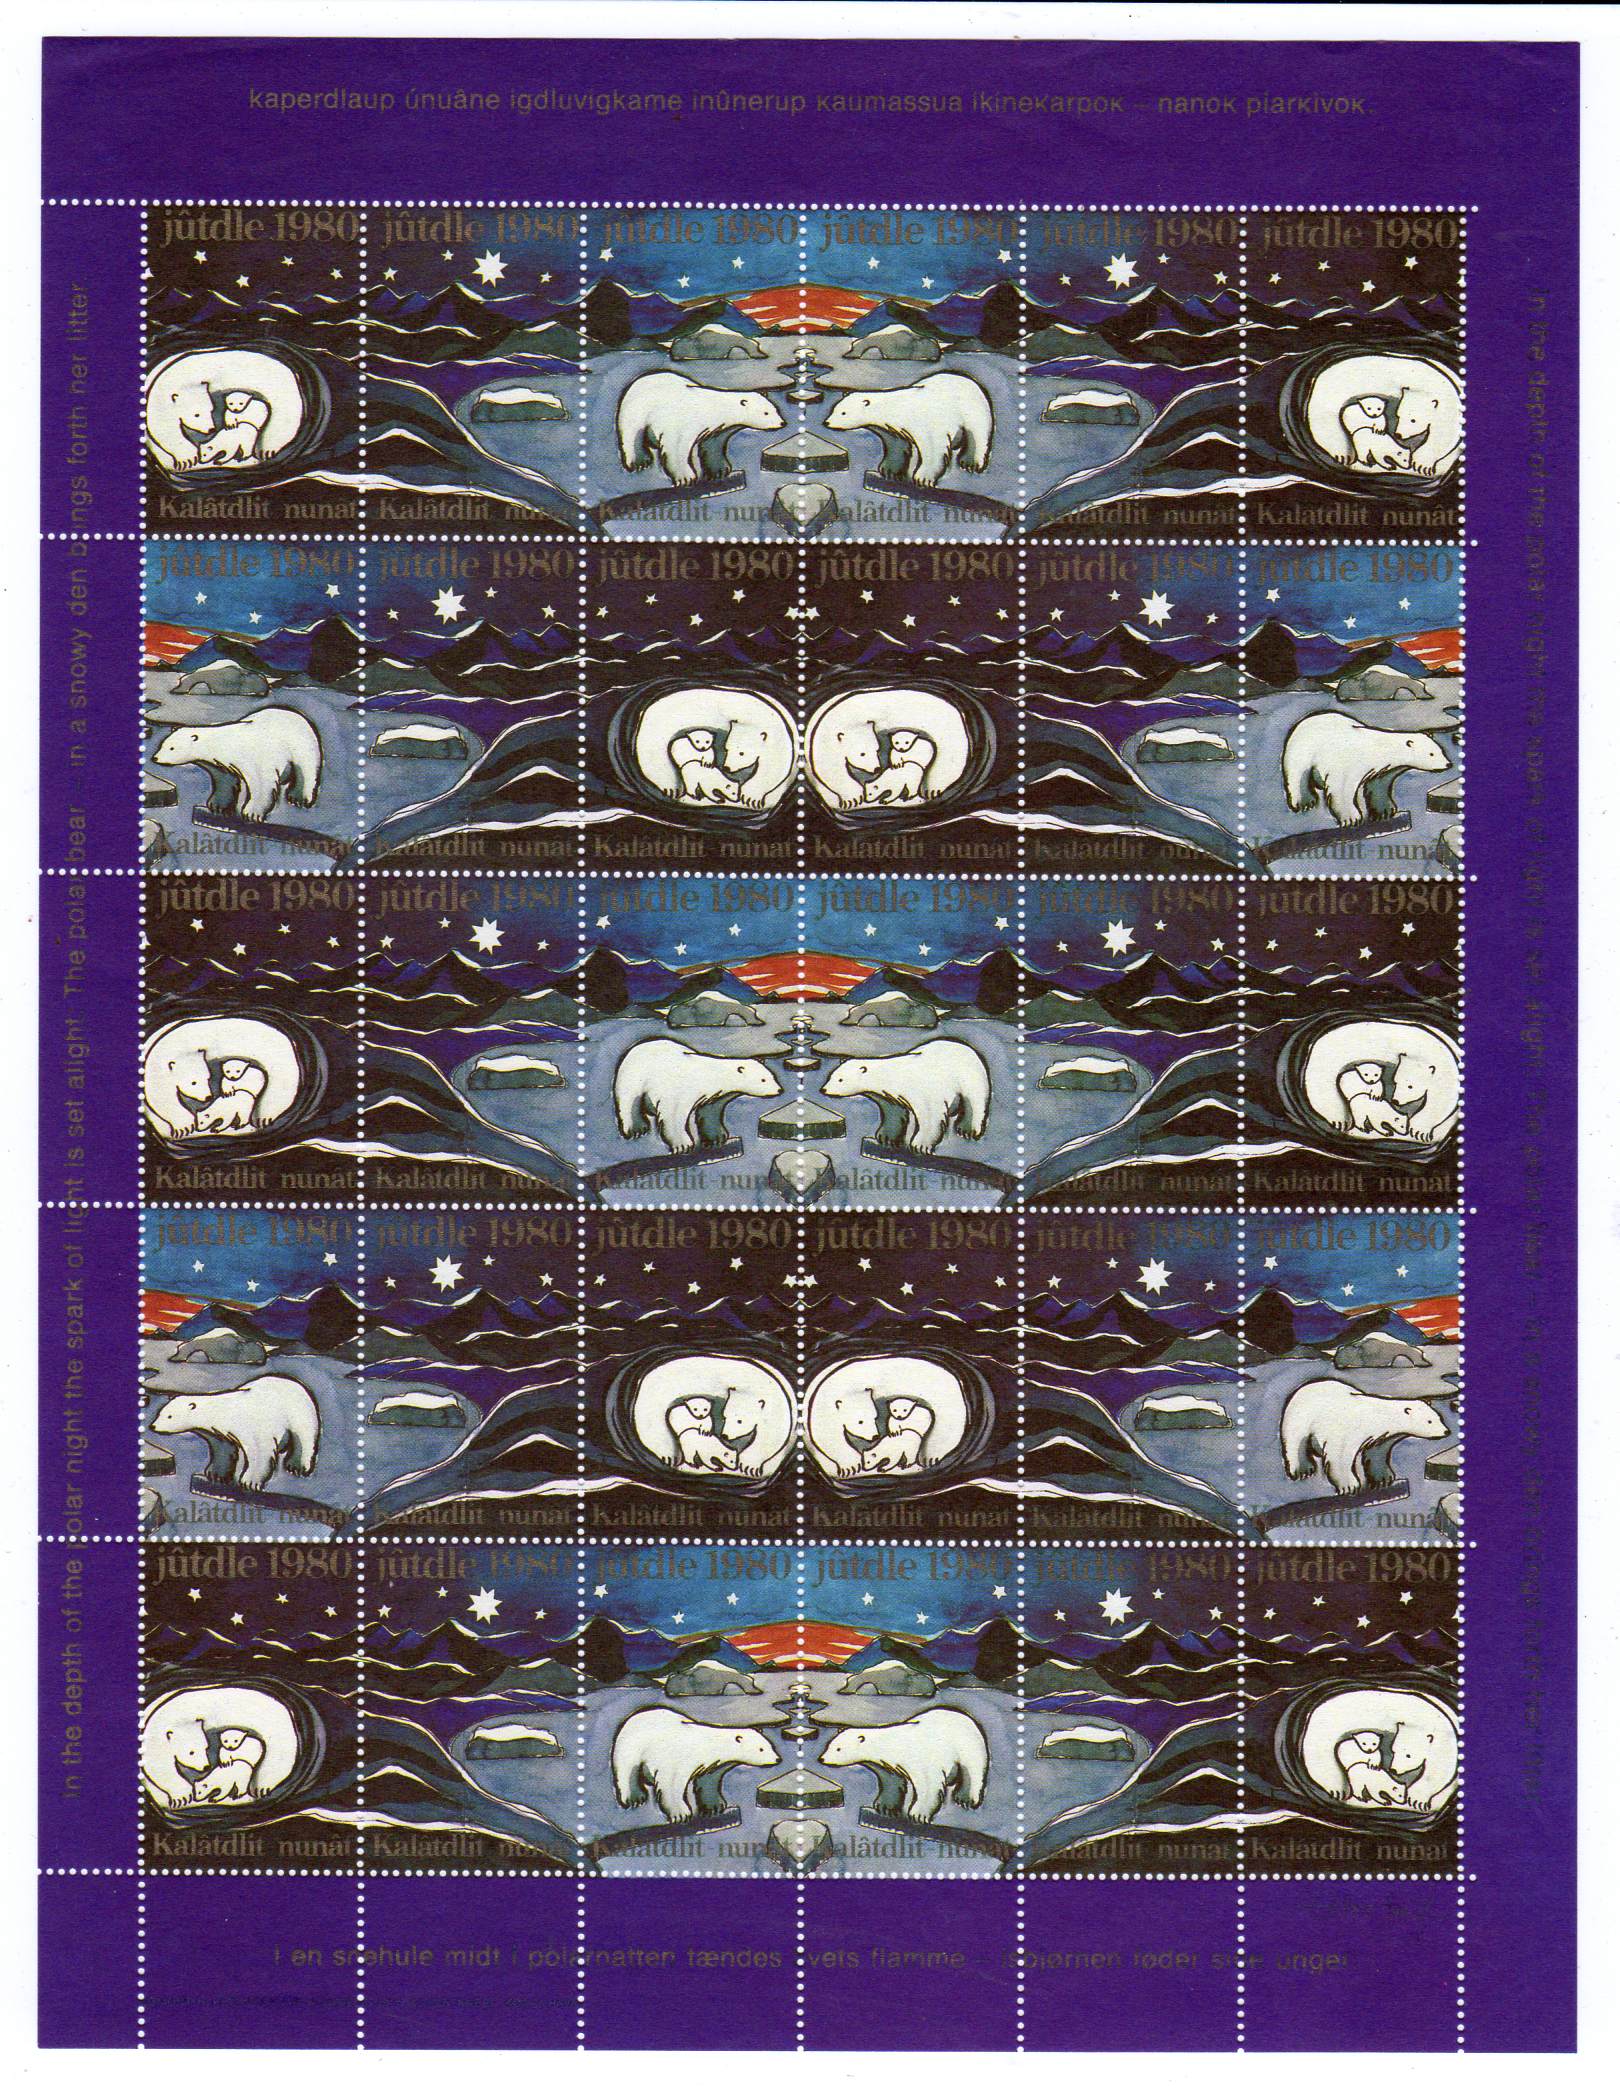 Polarbjørnen 1980